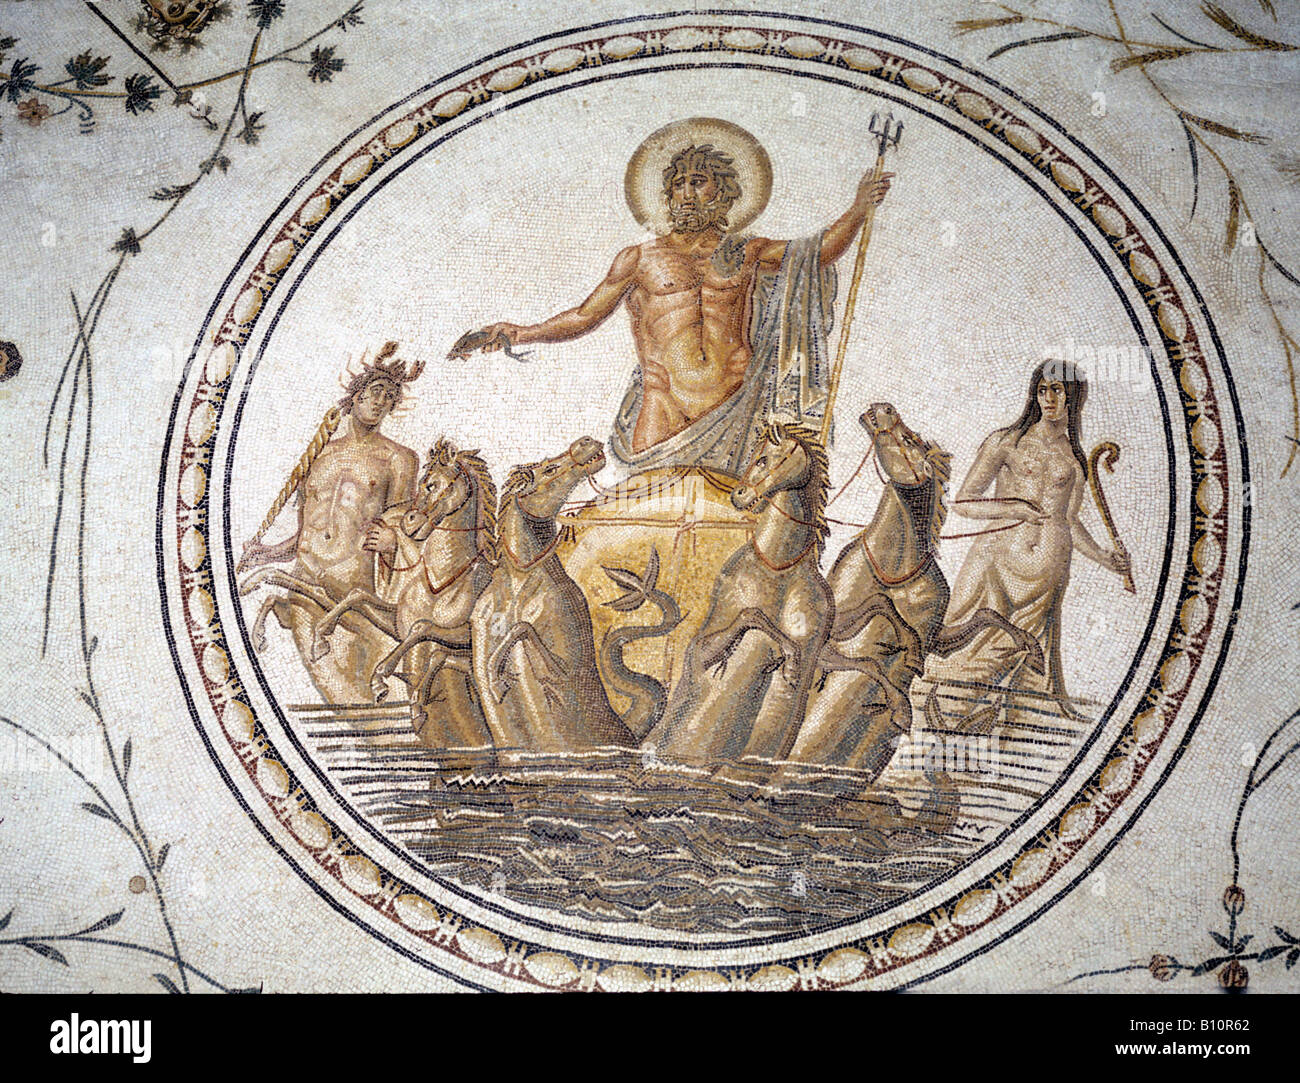 Mosaico romano. El triunfo de Neptuno. La Chebba,Túnez, 2 º siglo DC. Foto de stock